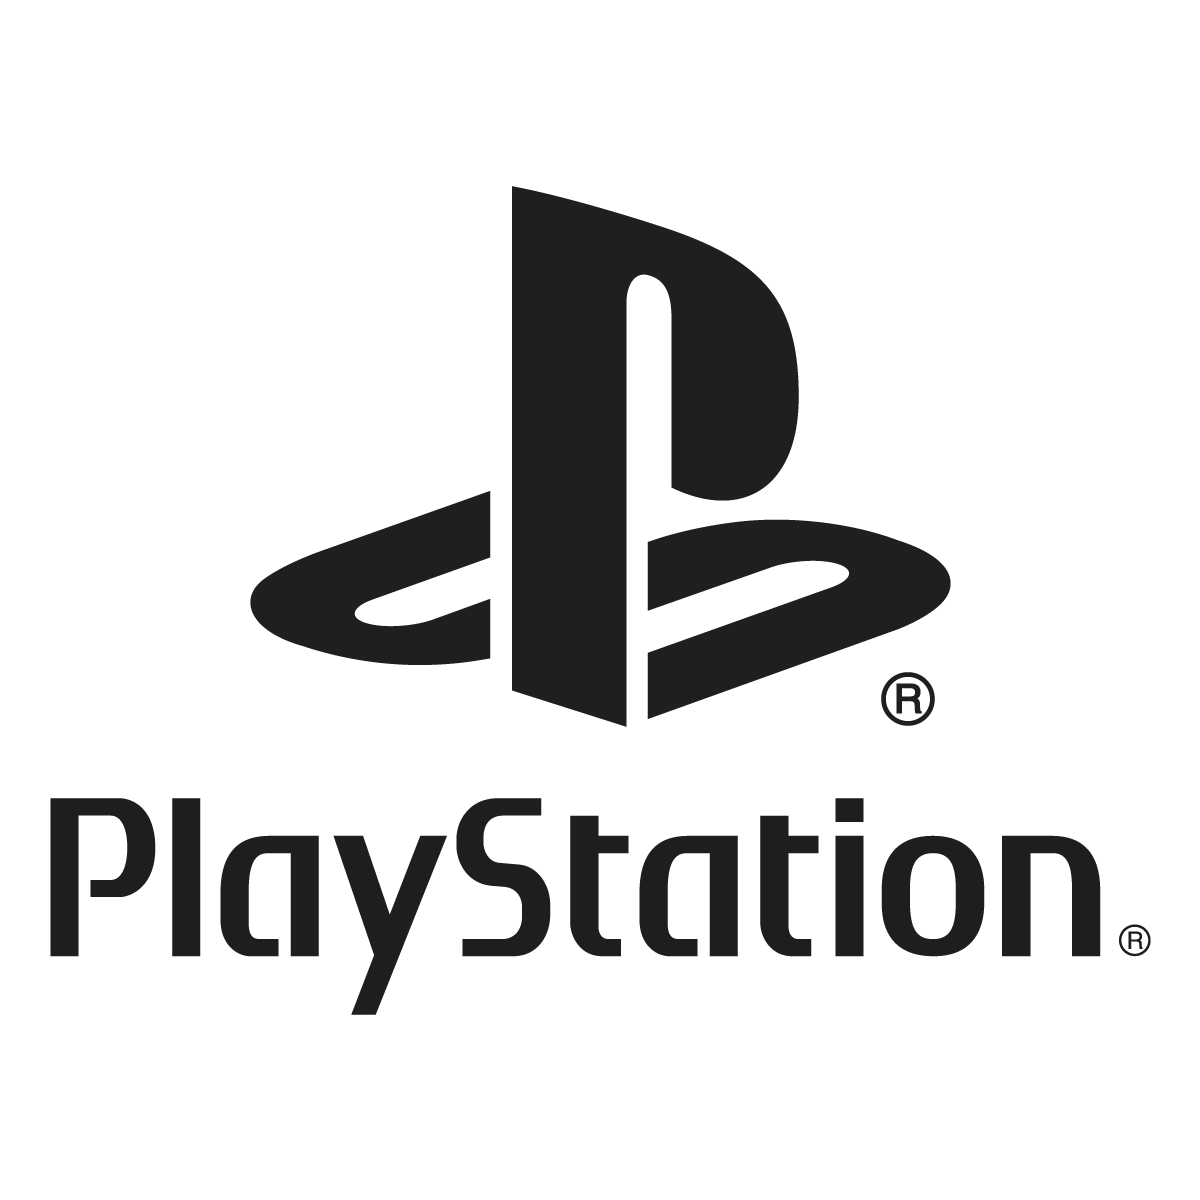 PlayStation Logo - PlayStation Logo Transparent Vector | Free Vector Silhouette ...